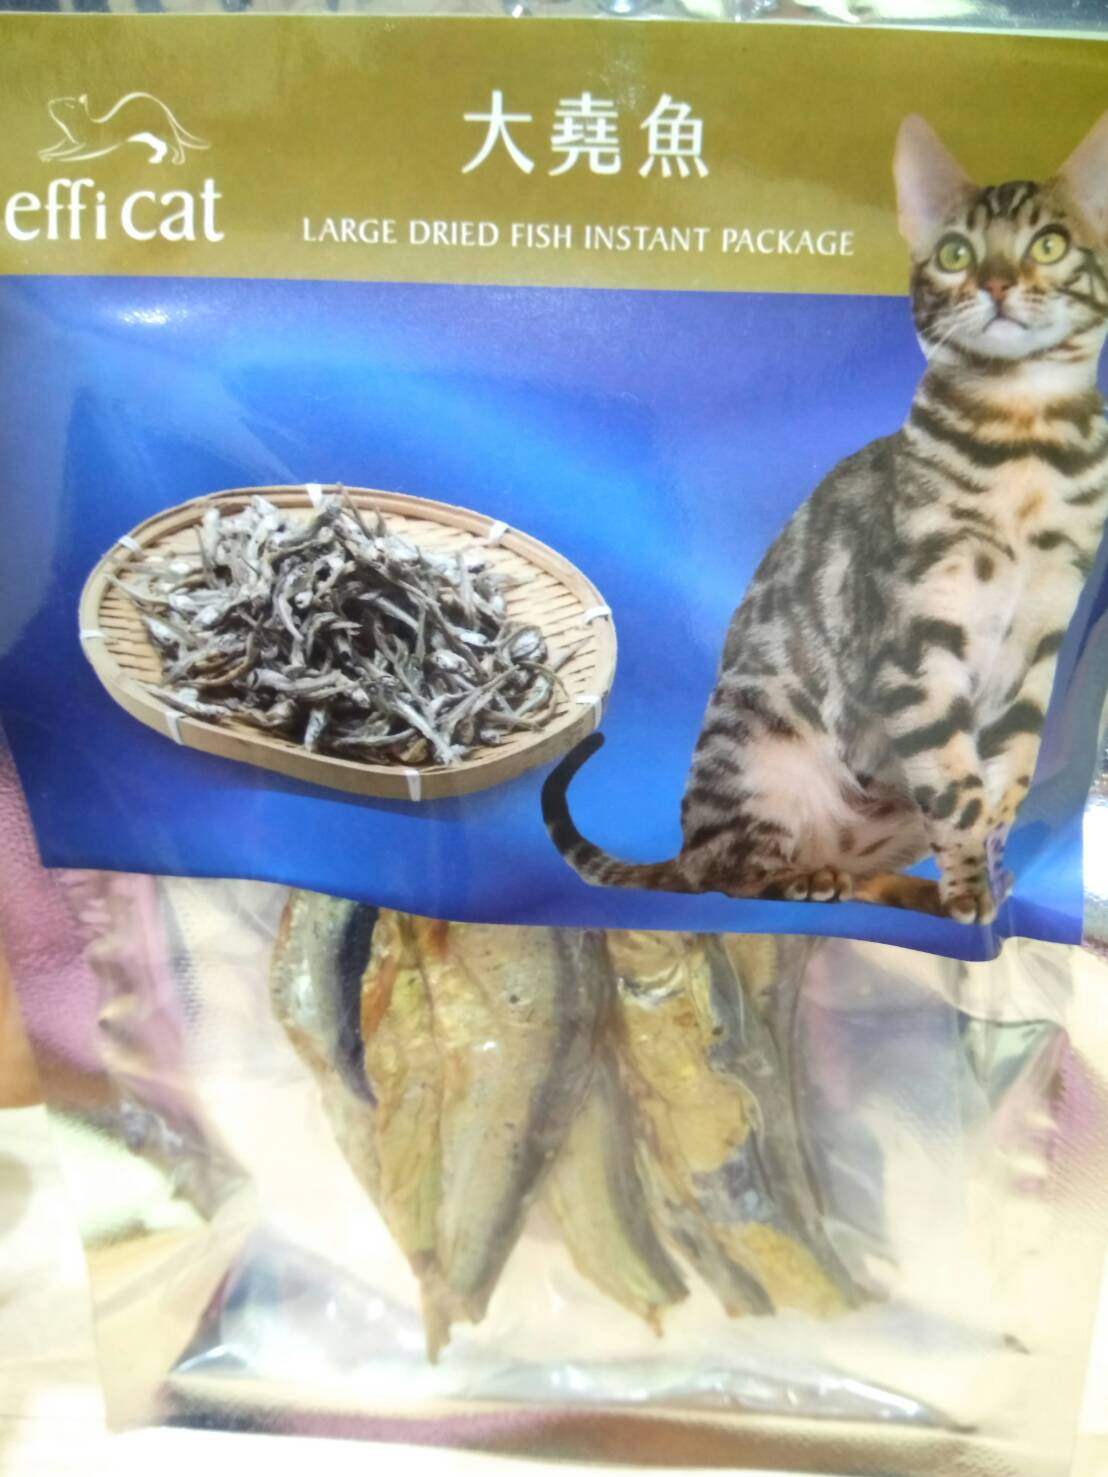 大堯魚殺菌軟袋
Dried Bigfishes